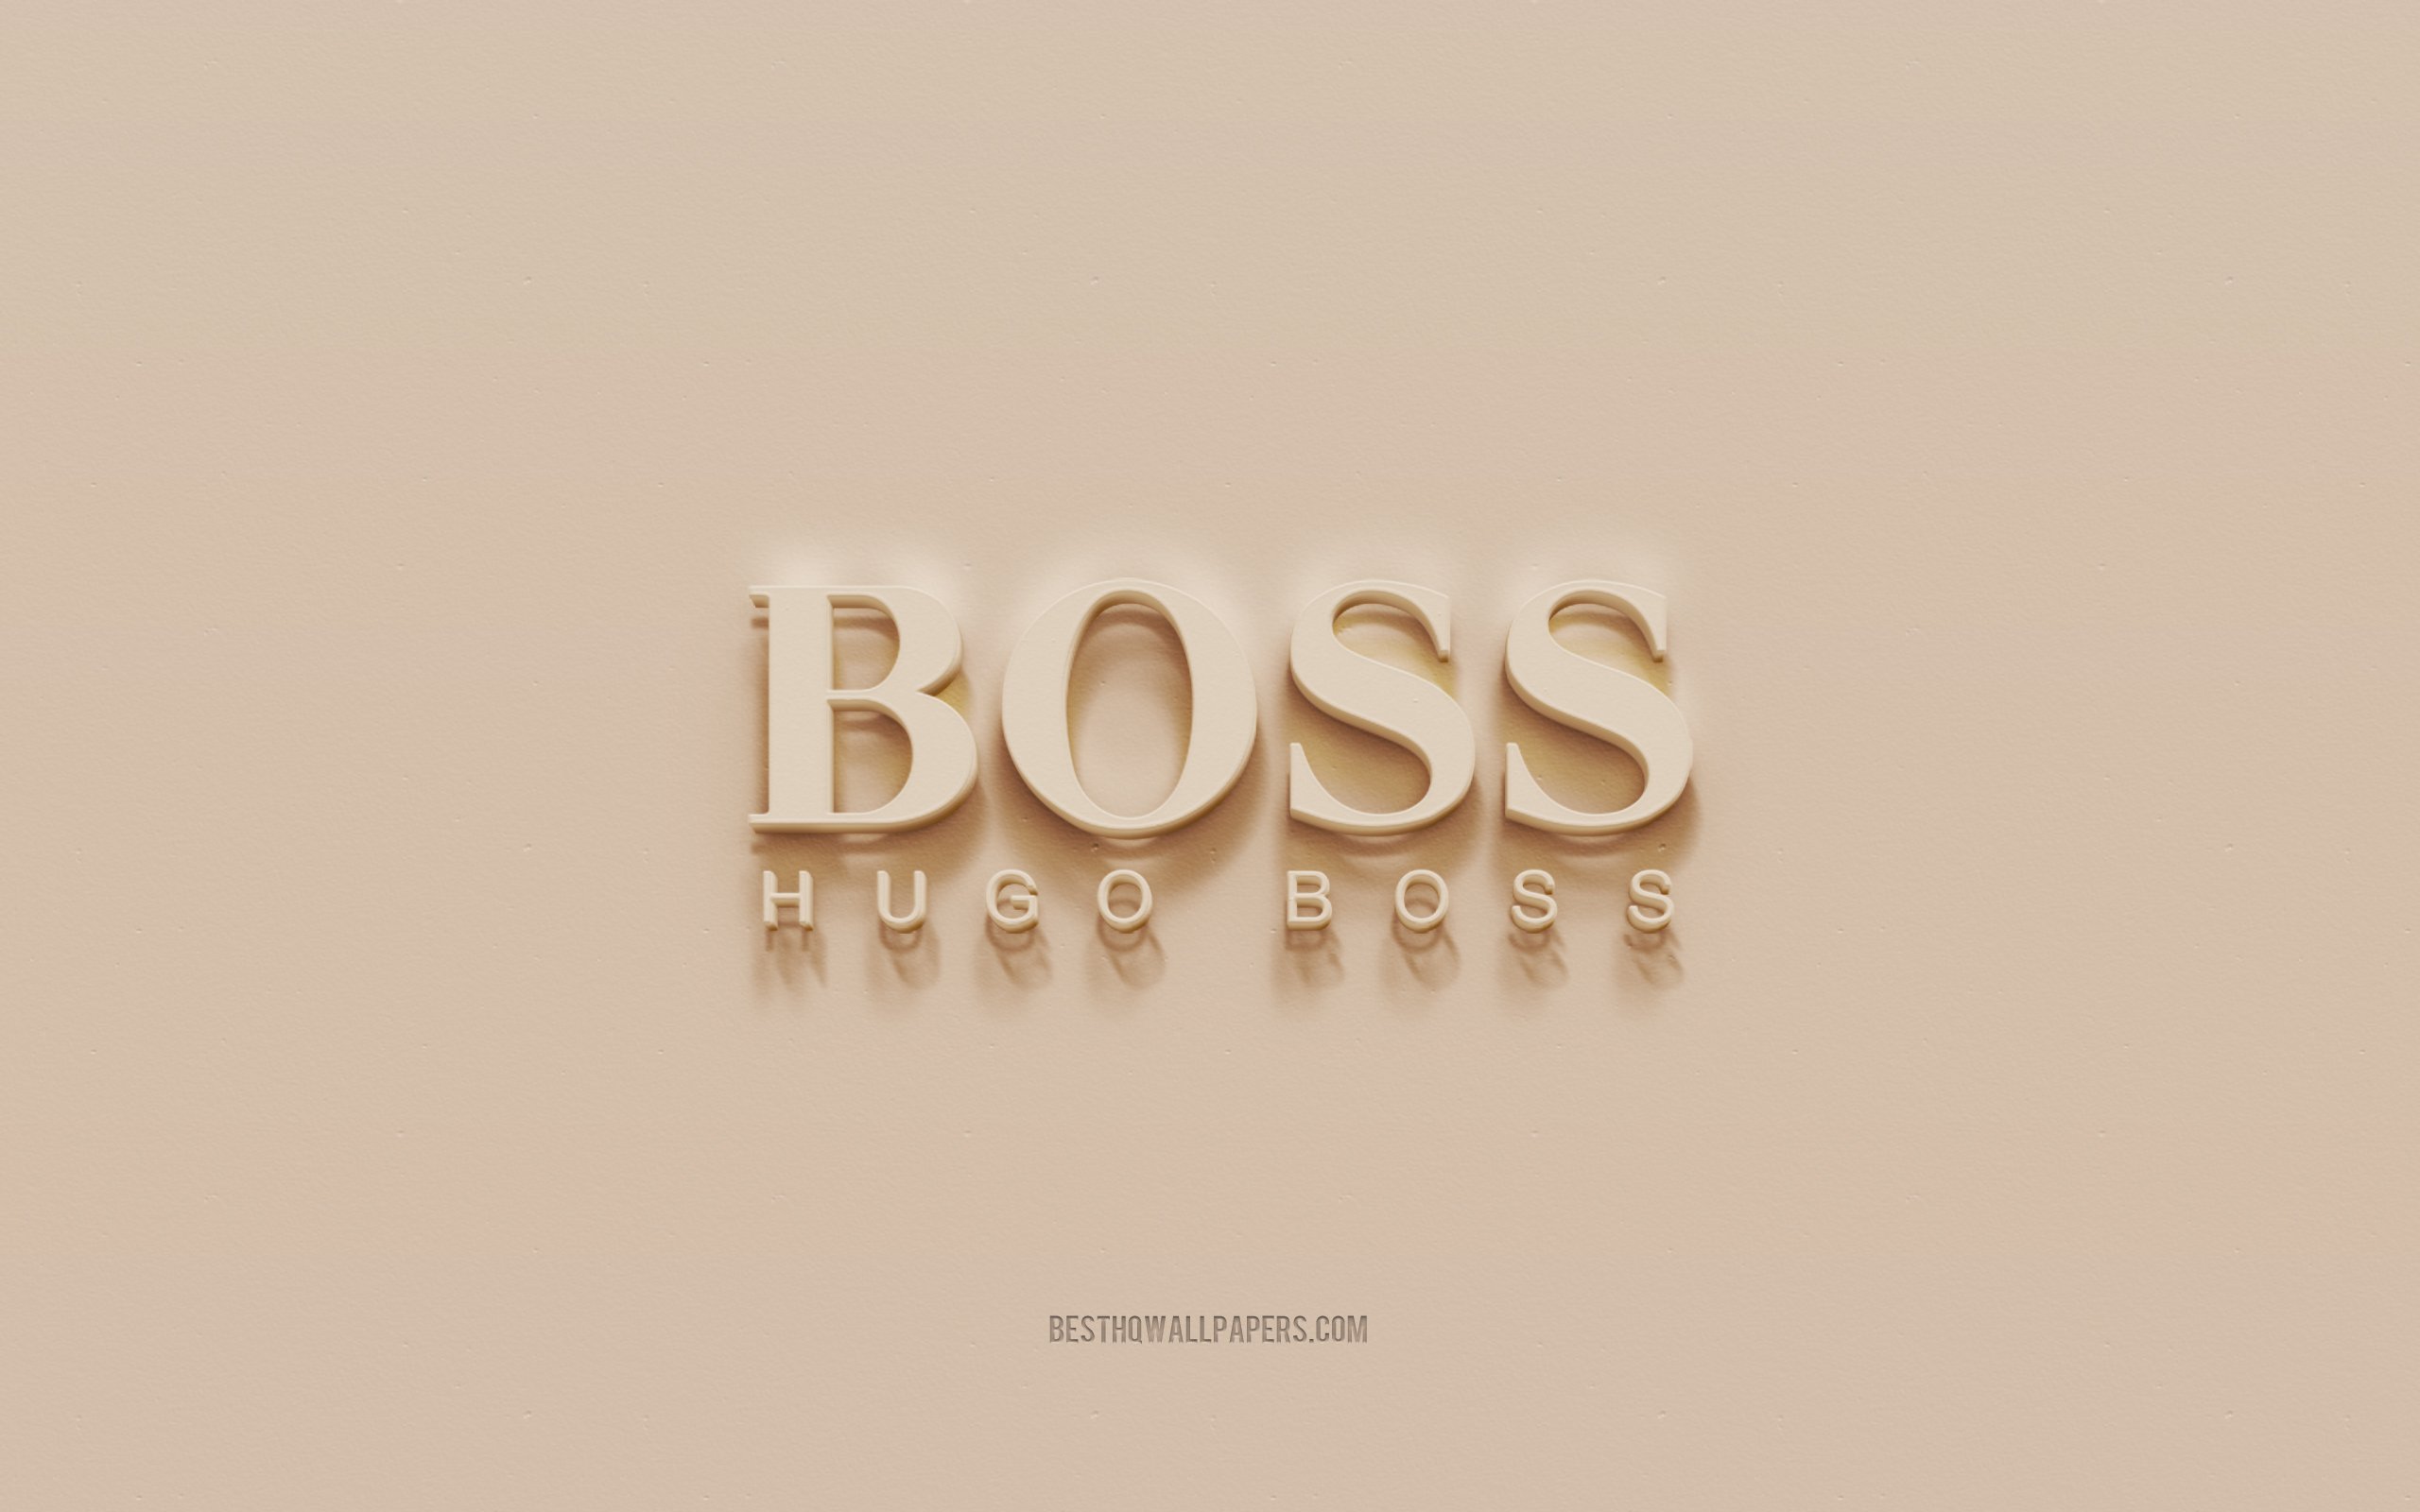 Хуга босс. Босс логотип. Hugo Boss логотип. Хуго босс надпись. Boss обои.